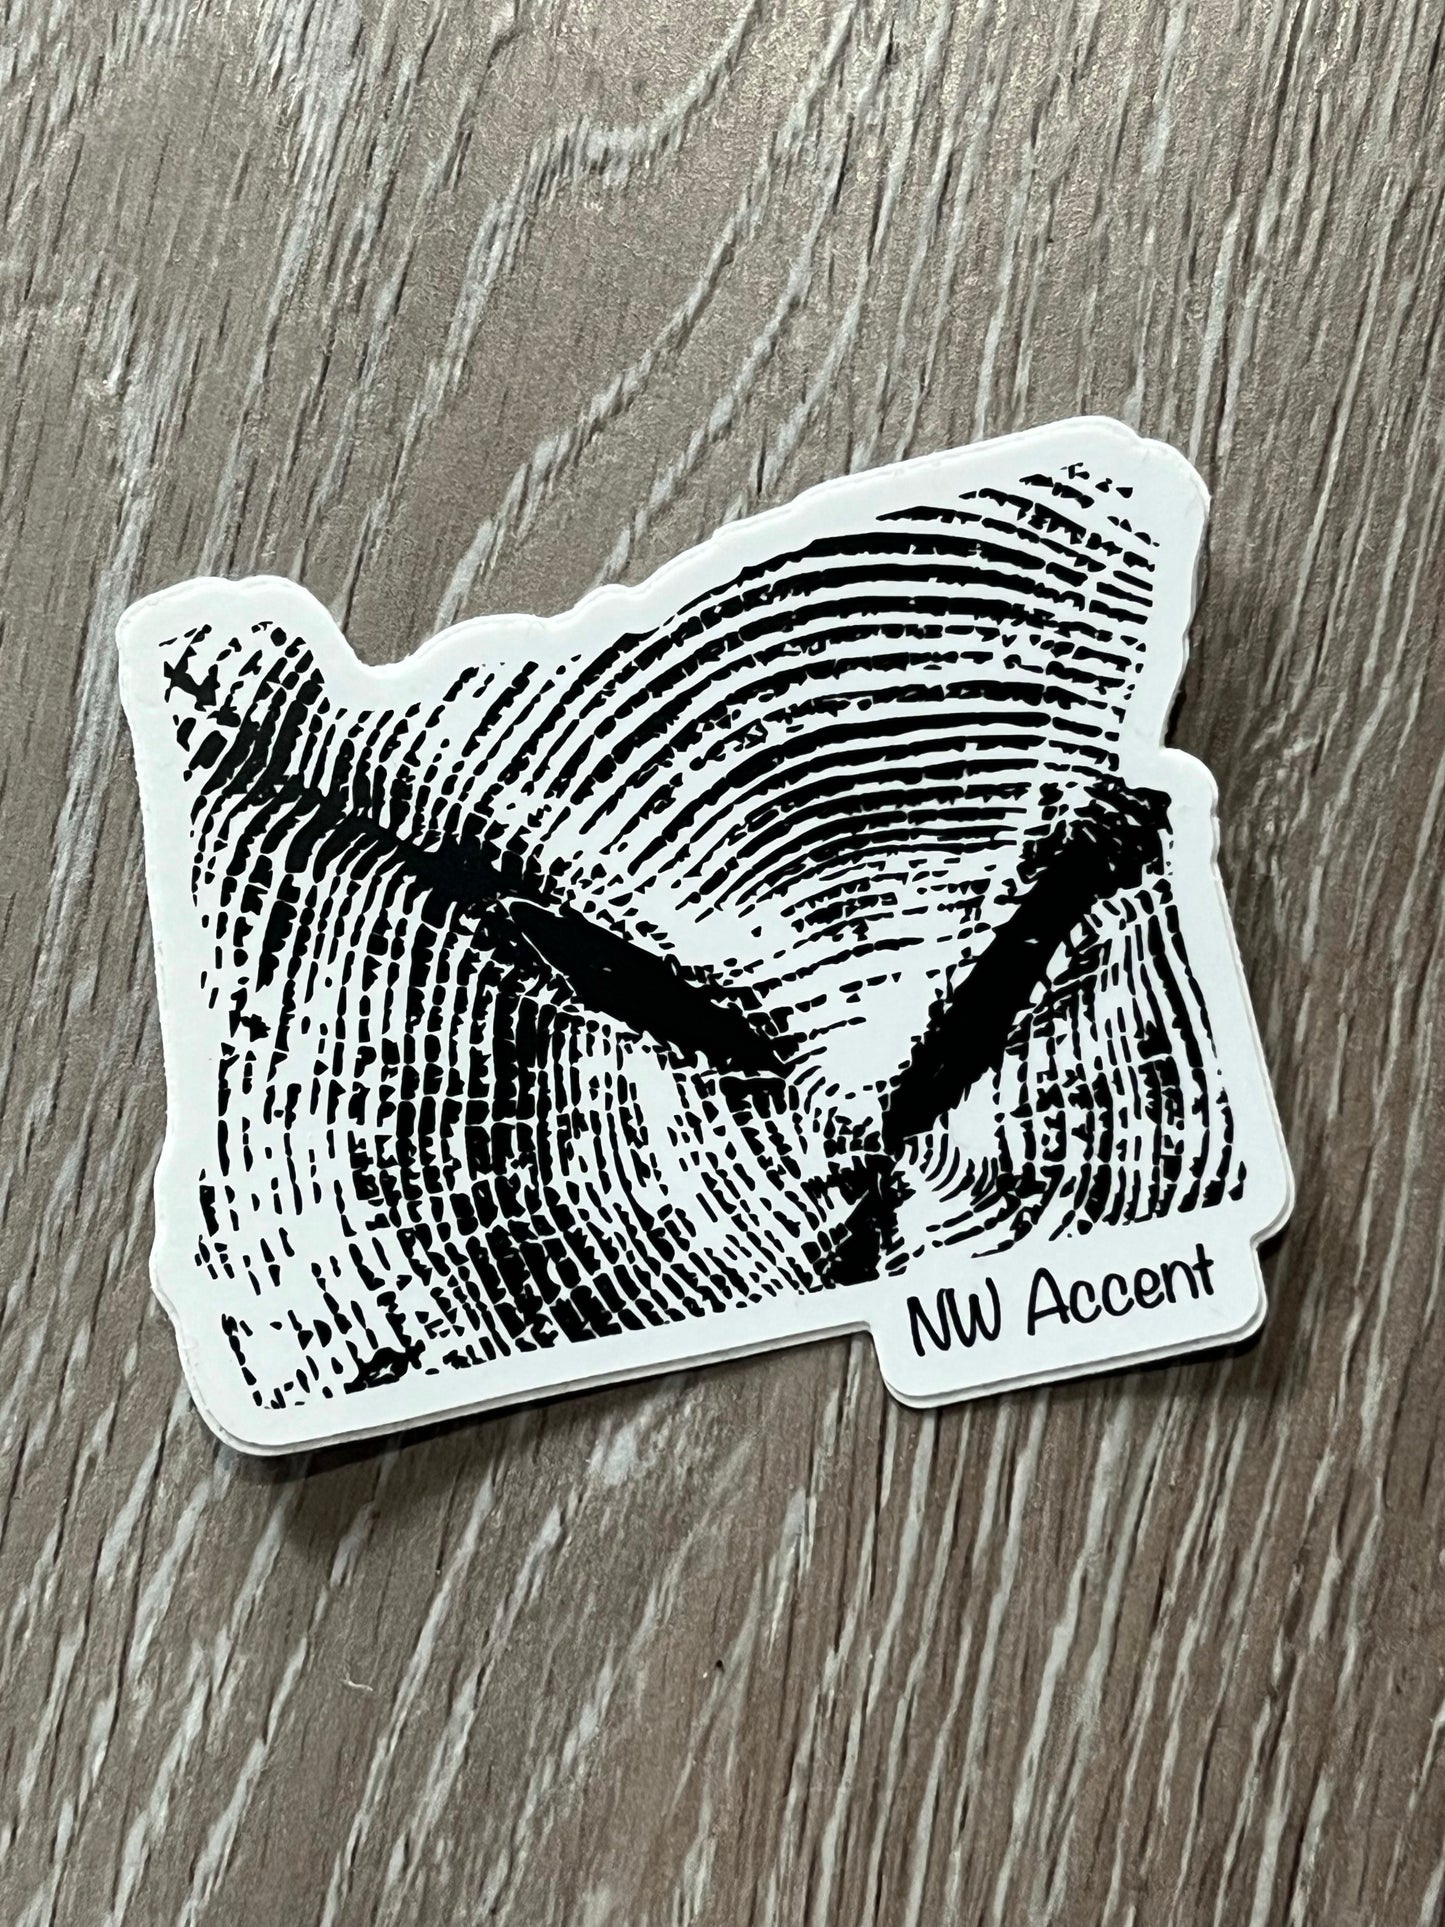 Oregon Tree Rings Sticker